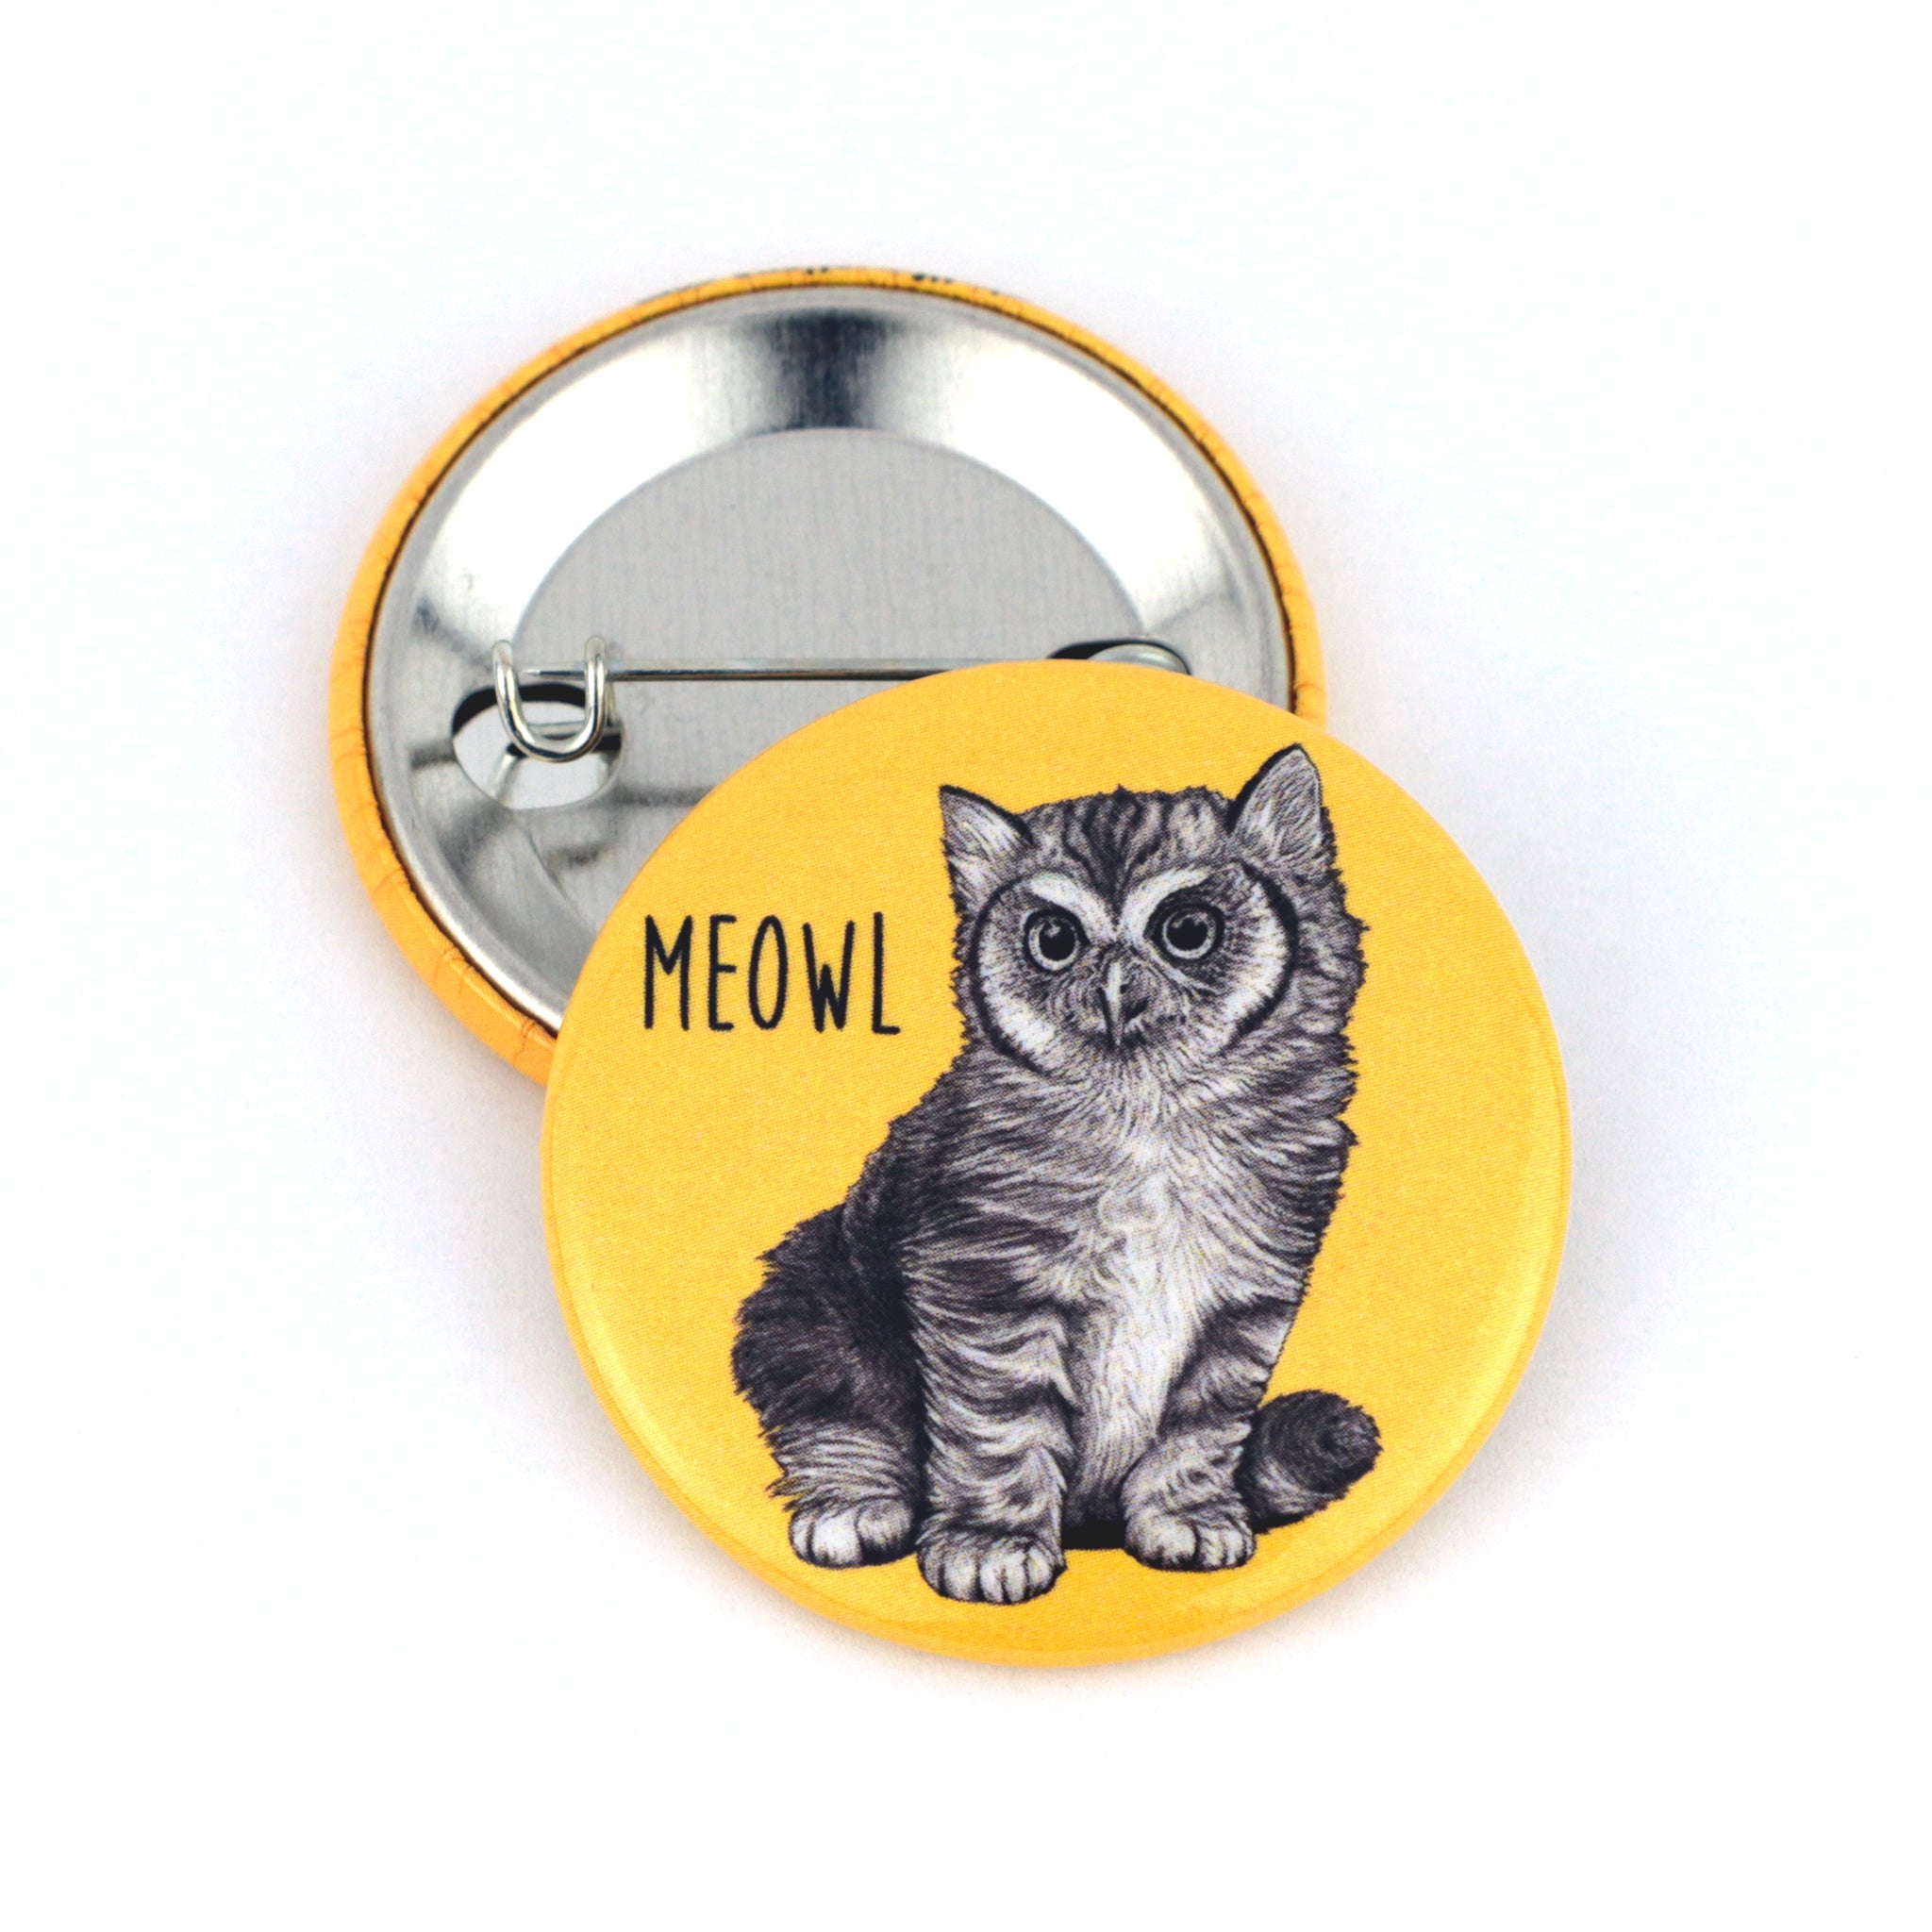 Meowl | Cat + Owl Hybrid Animal | 1.5" Pinback Button